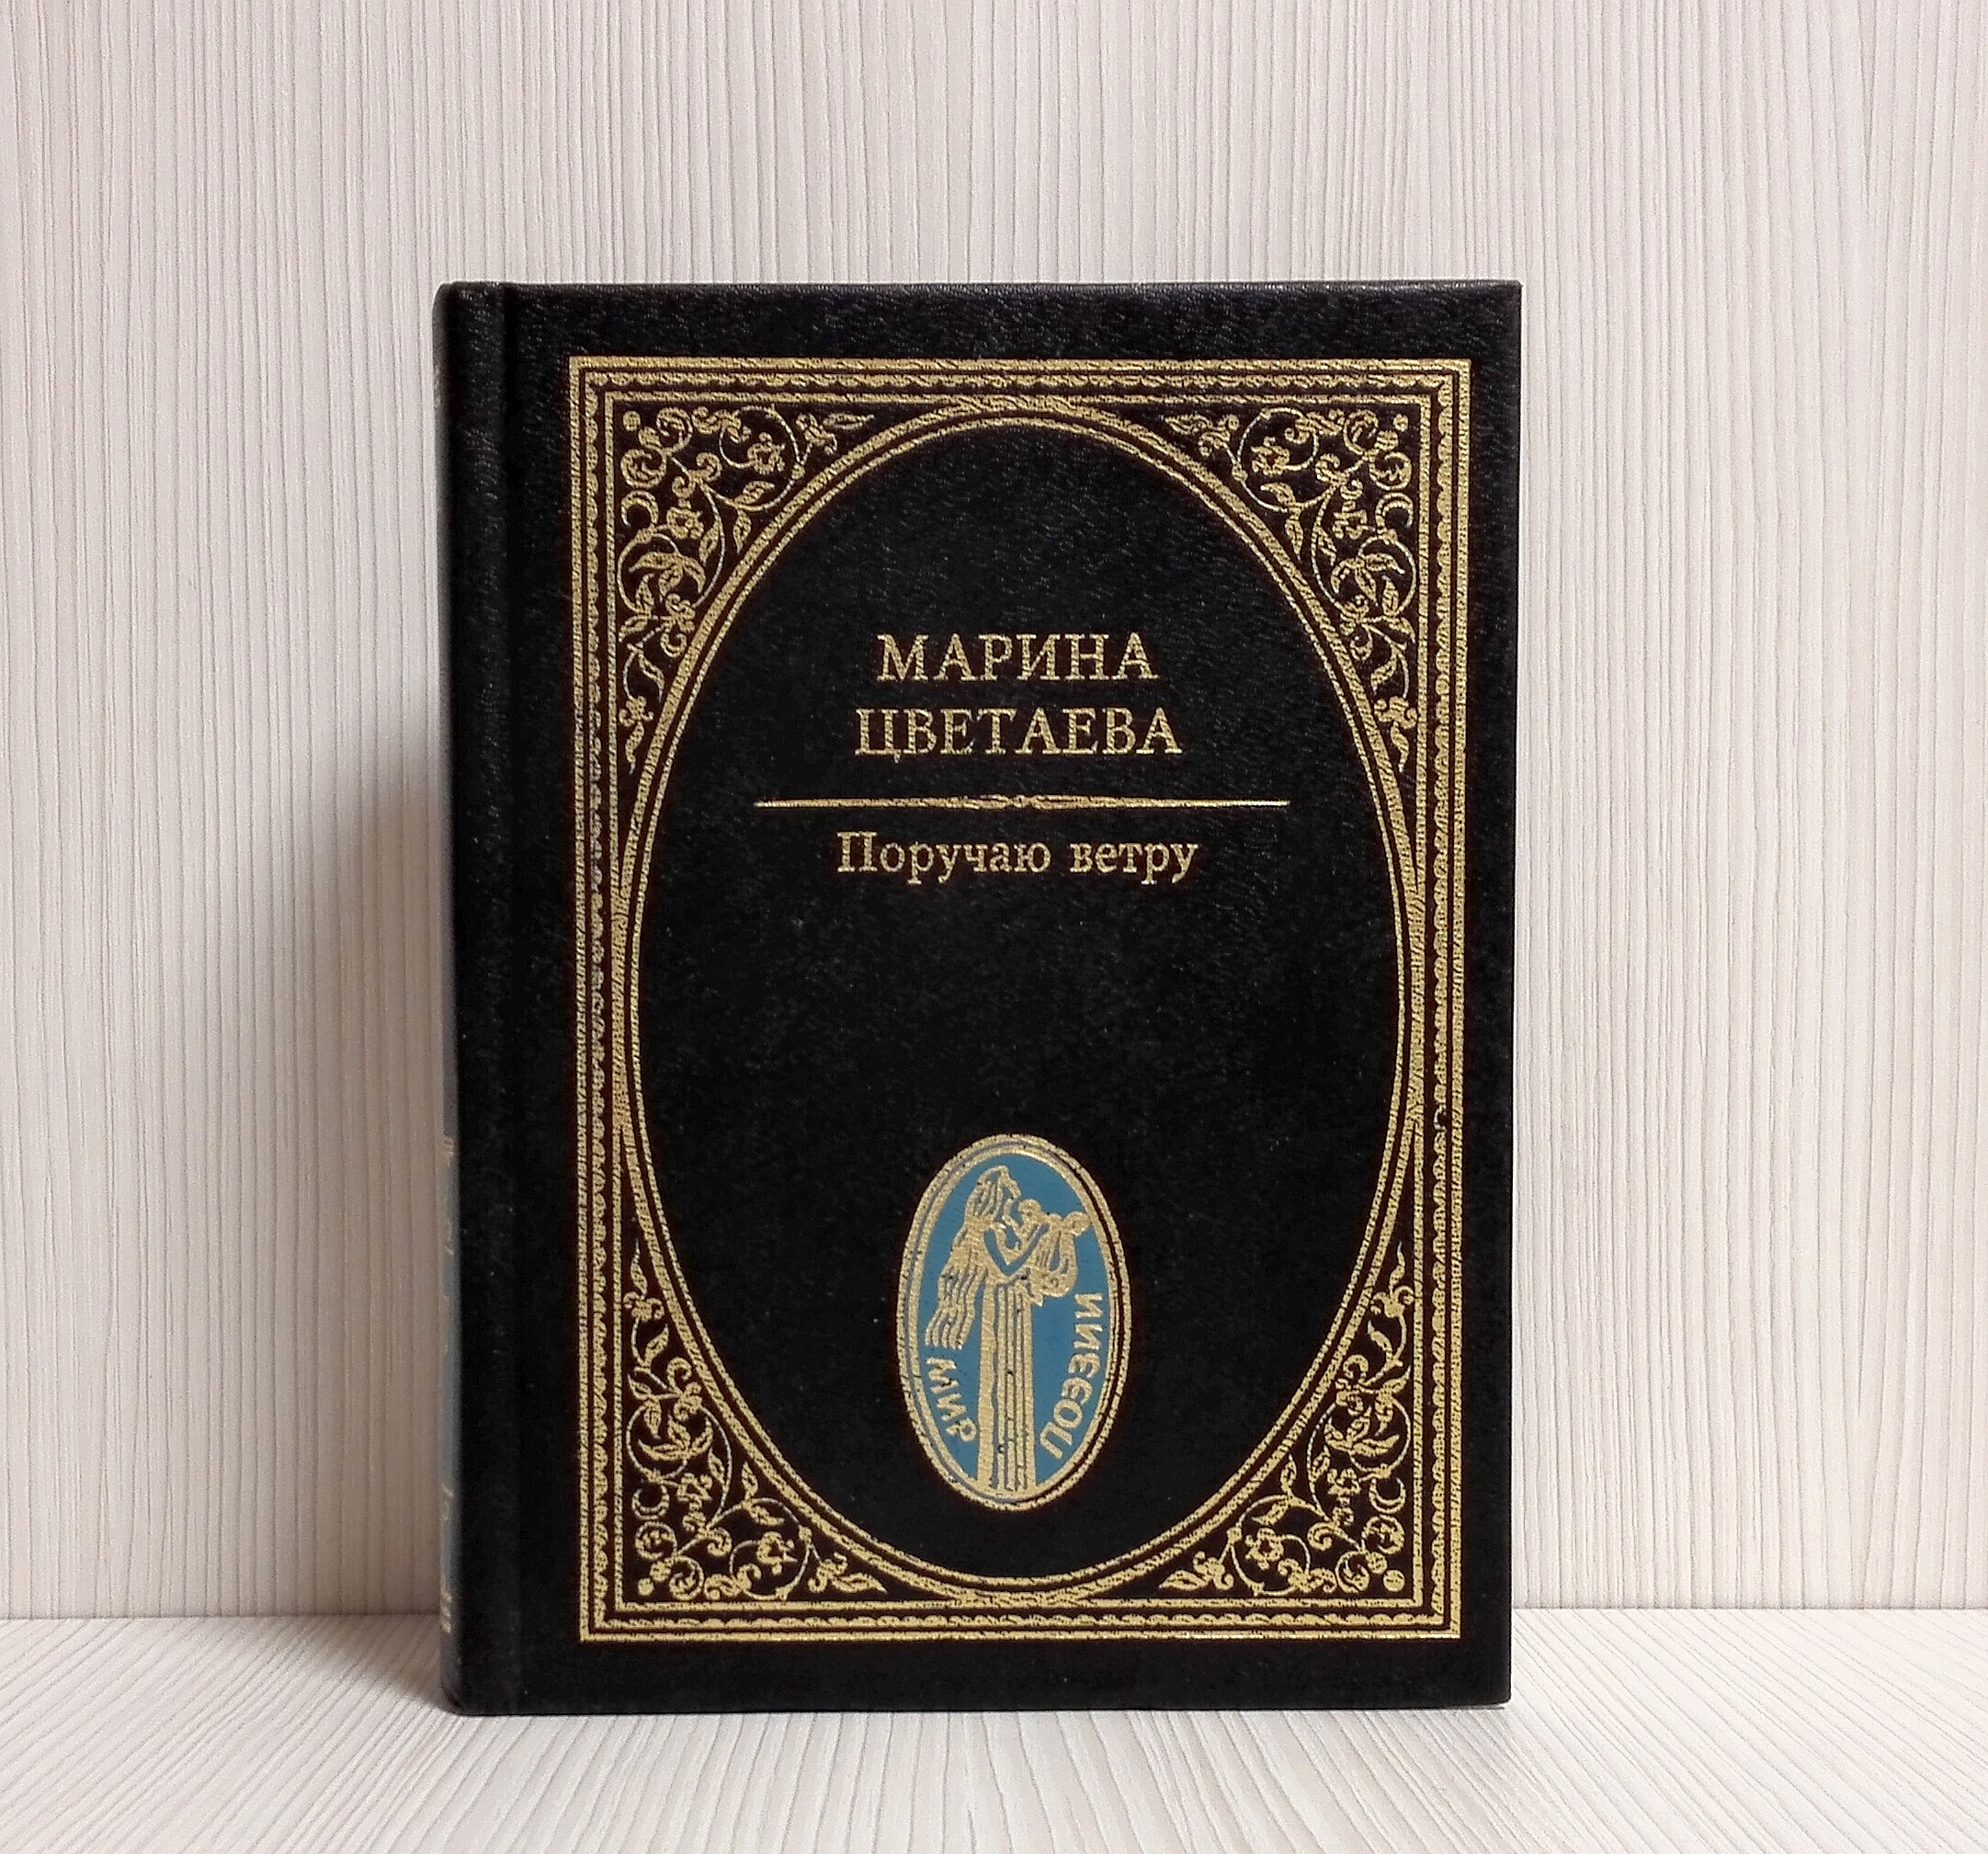 book of poems by tsvetaeva